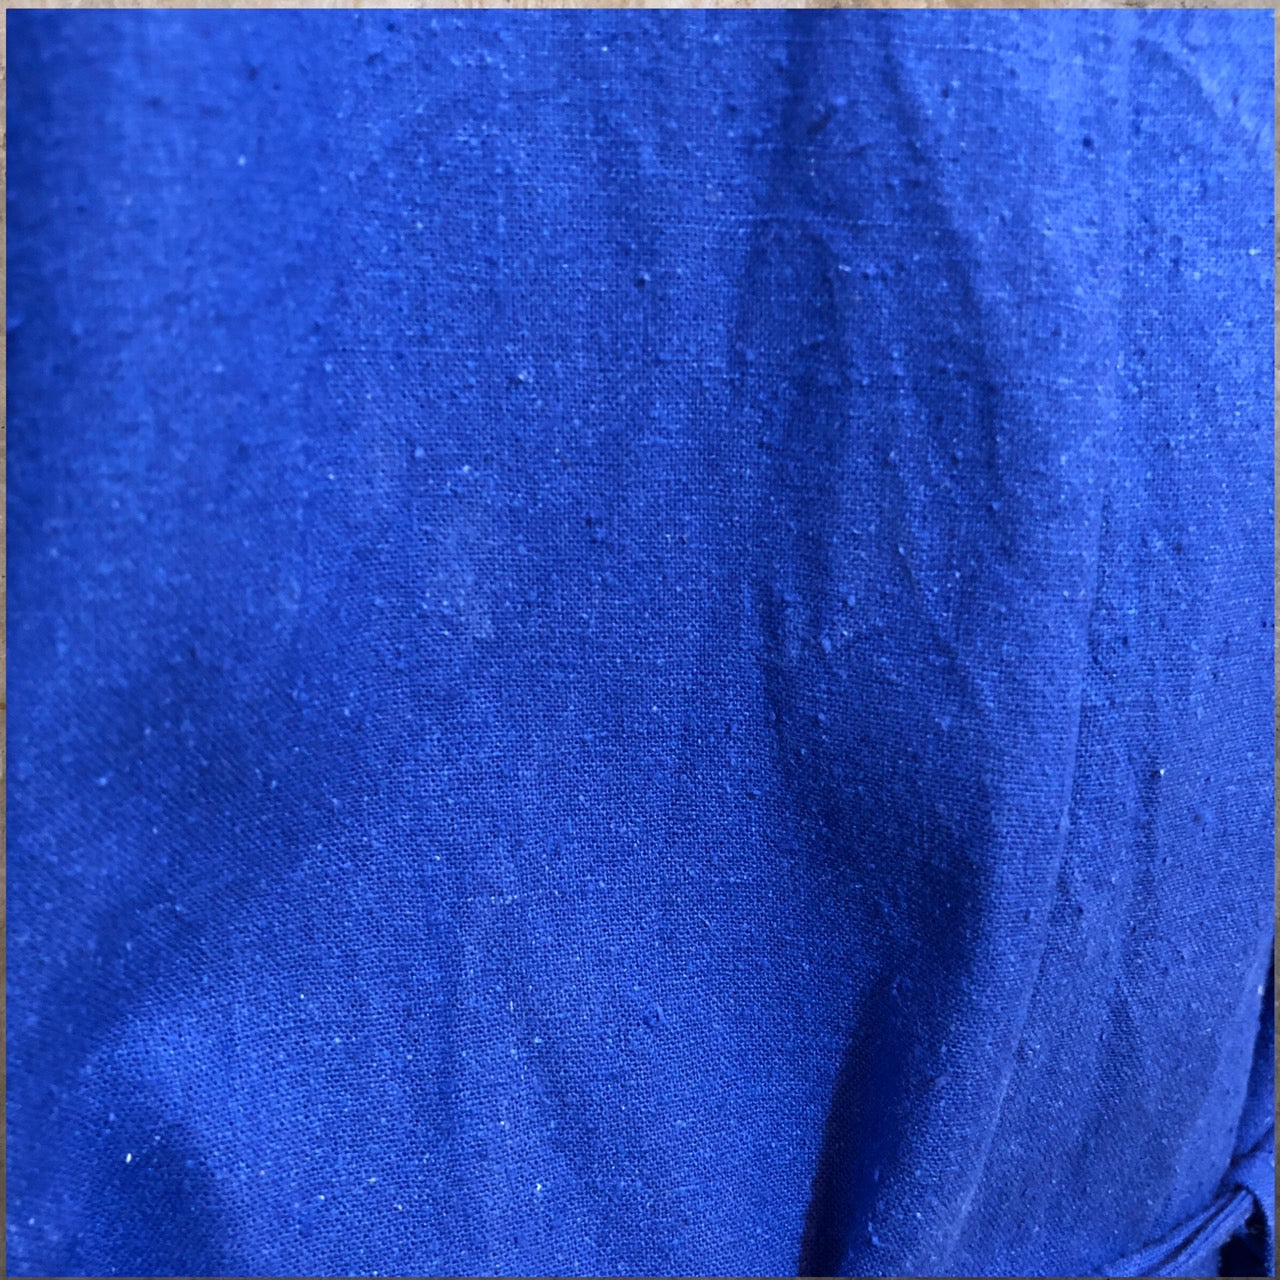 BASERANGE(ベースレンジ) HONDA DRESS RAW SILK/ピリング加工シルクワンピース S(M~Lサイズ程度) ブルー